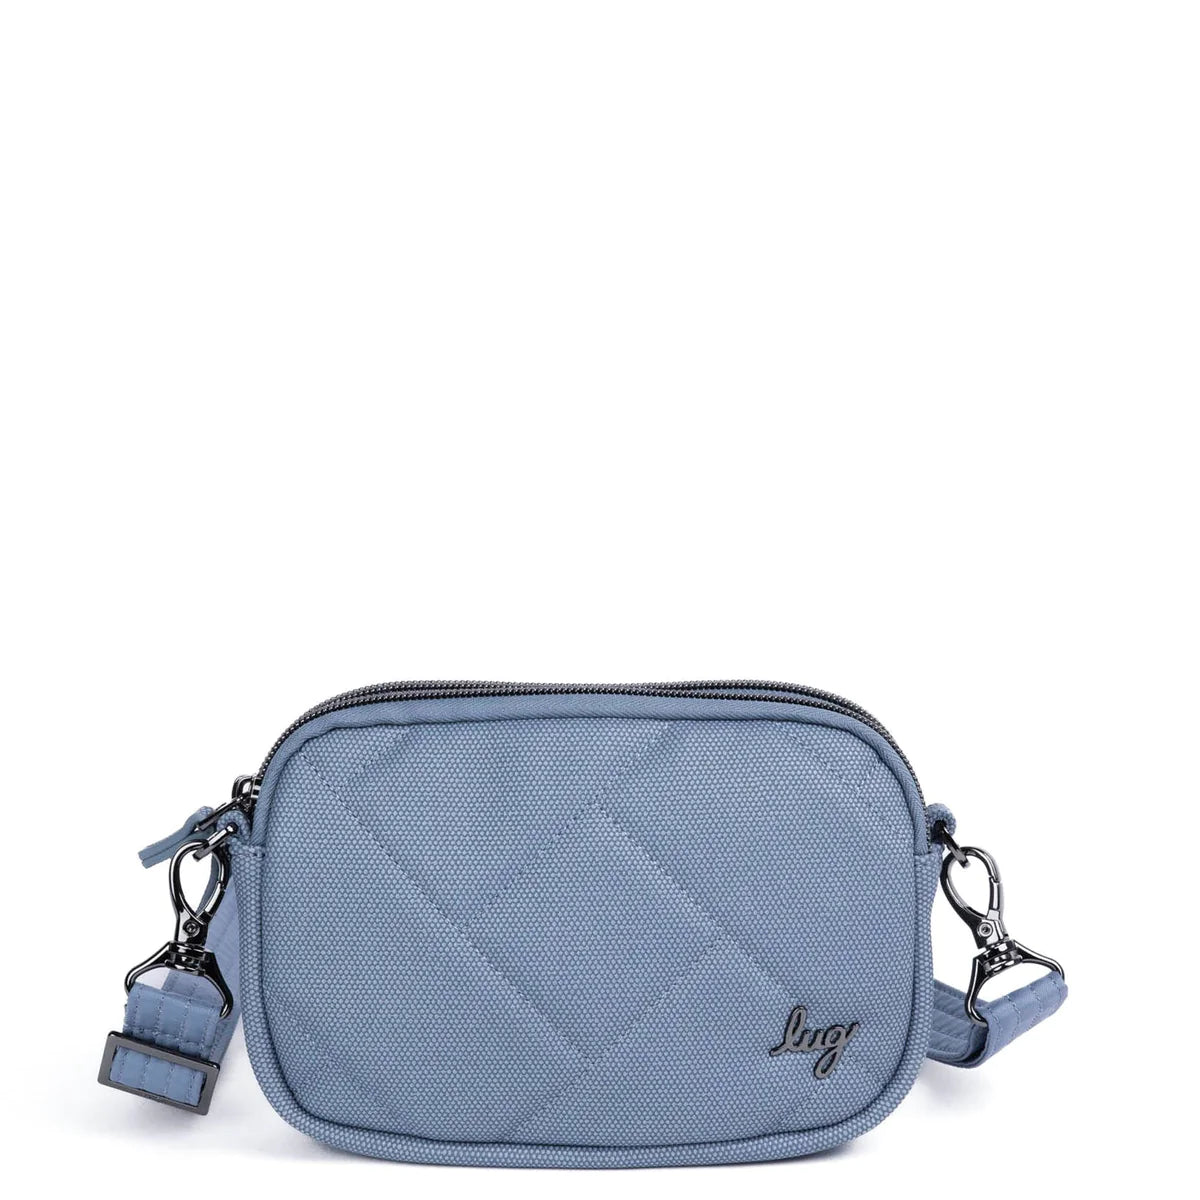  LUG - Hitch Matte Luxe VL Belt Bag : Clothing, Shoes